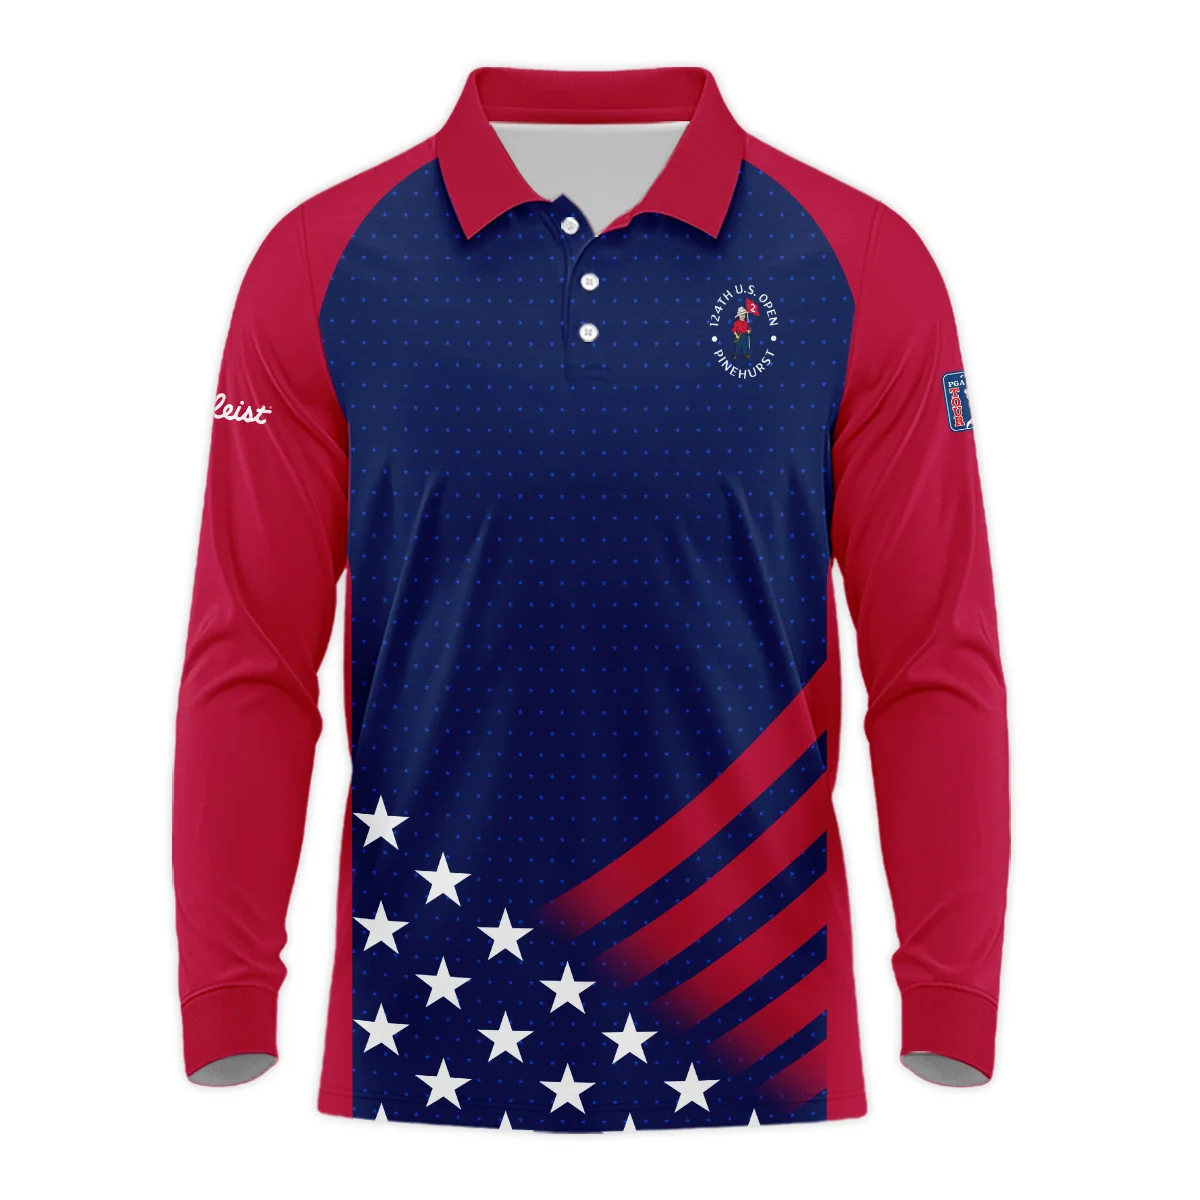 Titleist 124th U.S. Open Pinehurst Star White Dark Blue Red Background Quarter-Zip Jacket Style Classic Quarter-Zip Jacket